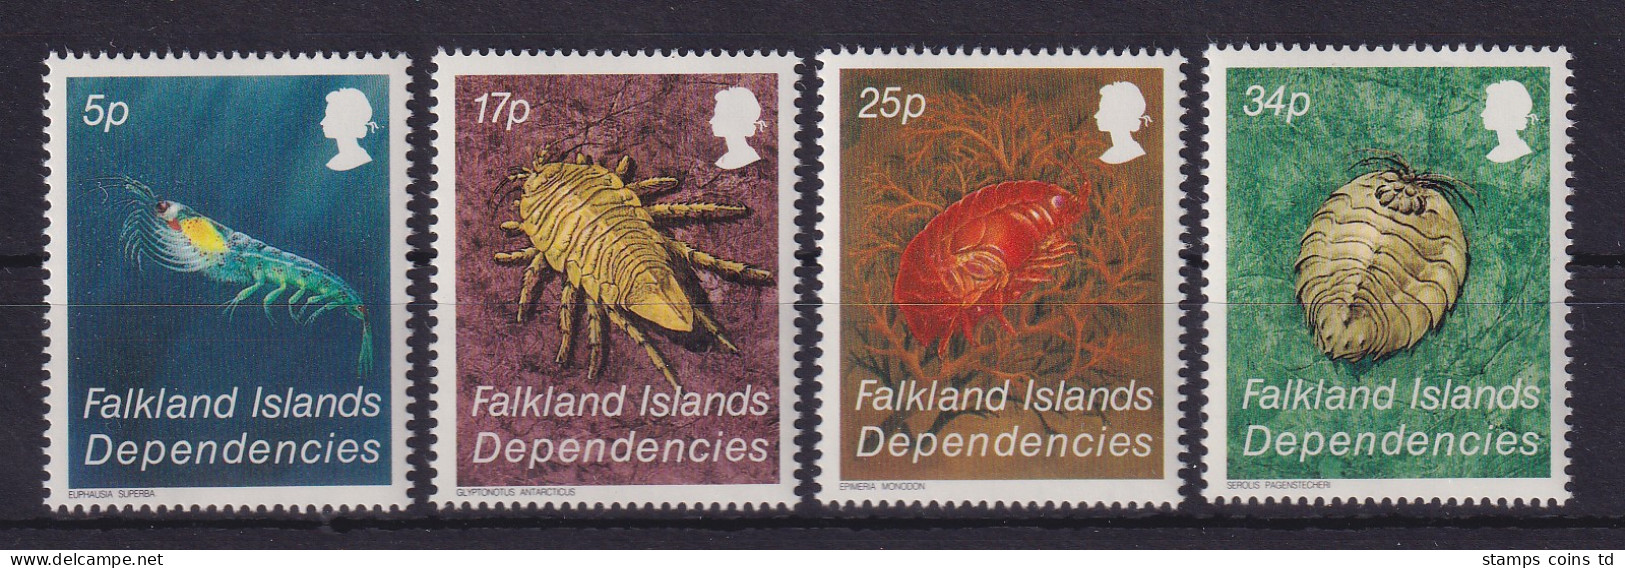 Falkland-Inseln Dependencies 1984 Krebstiere Mi.-Nr. 121-124 Postfrisch ** - Südgeorgien